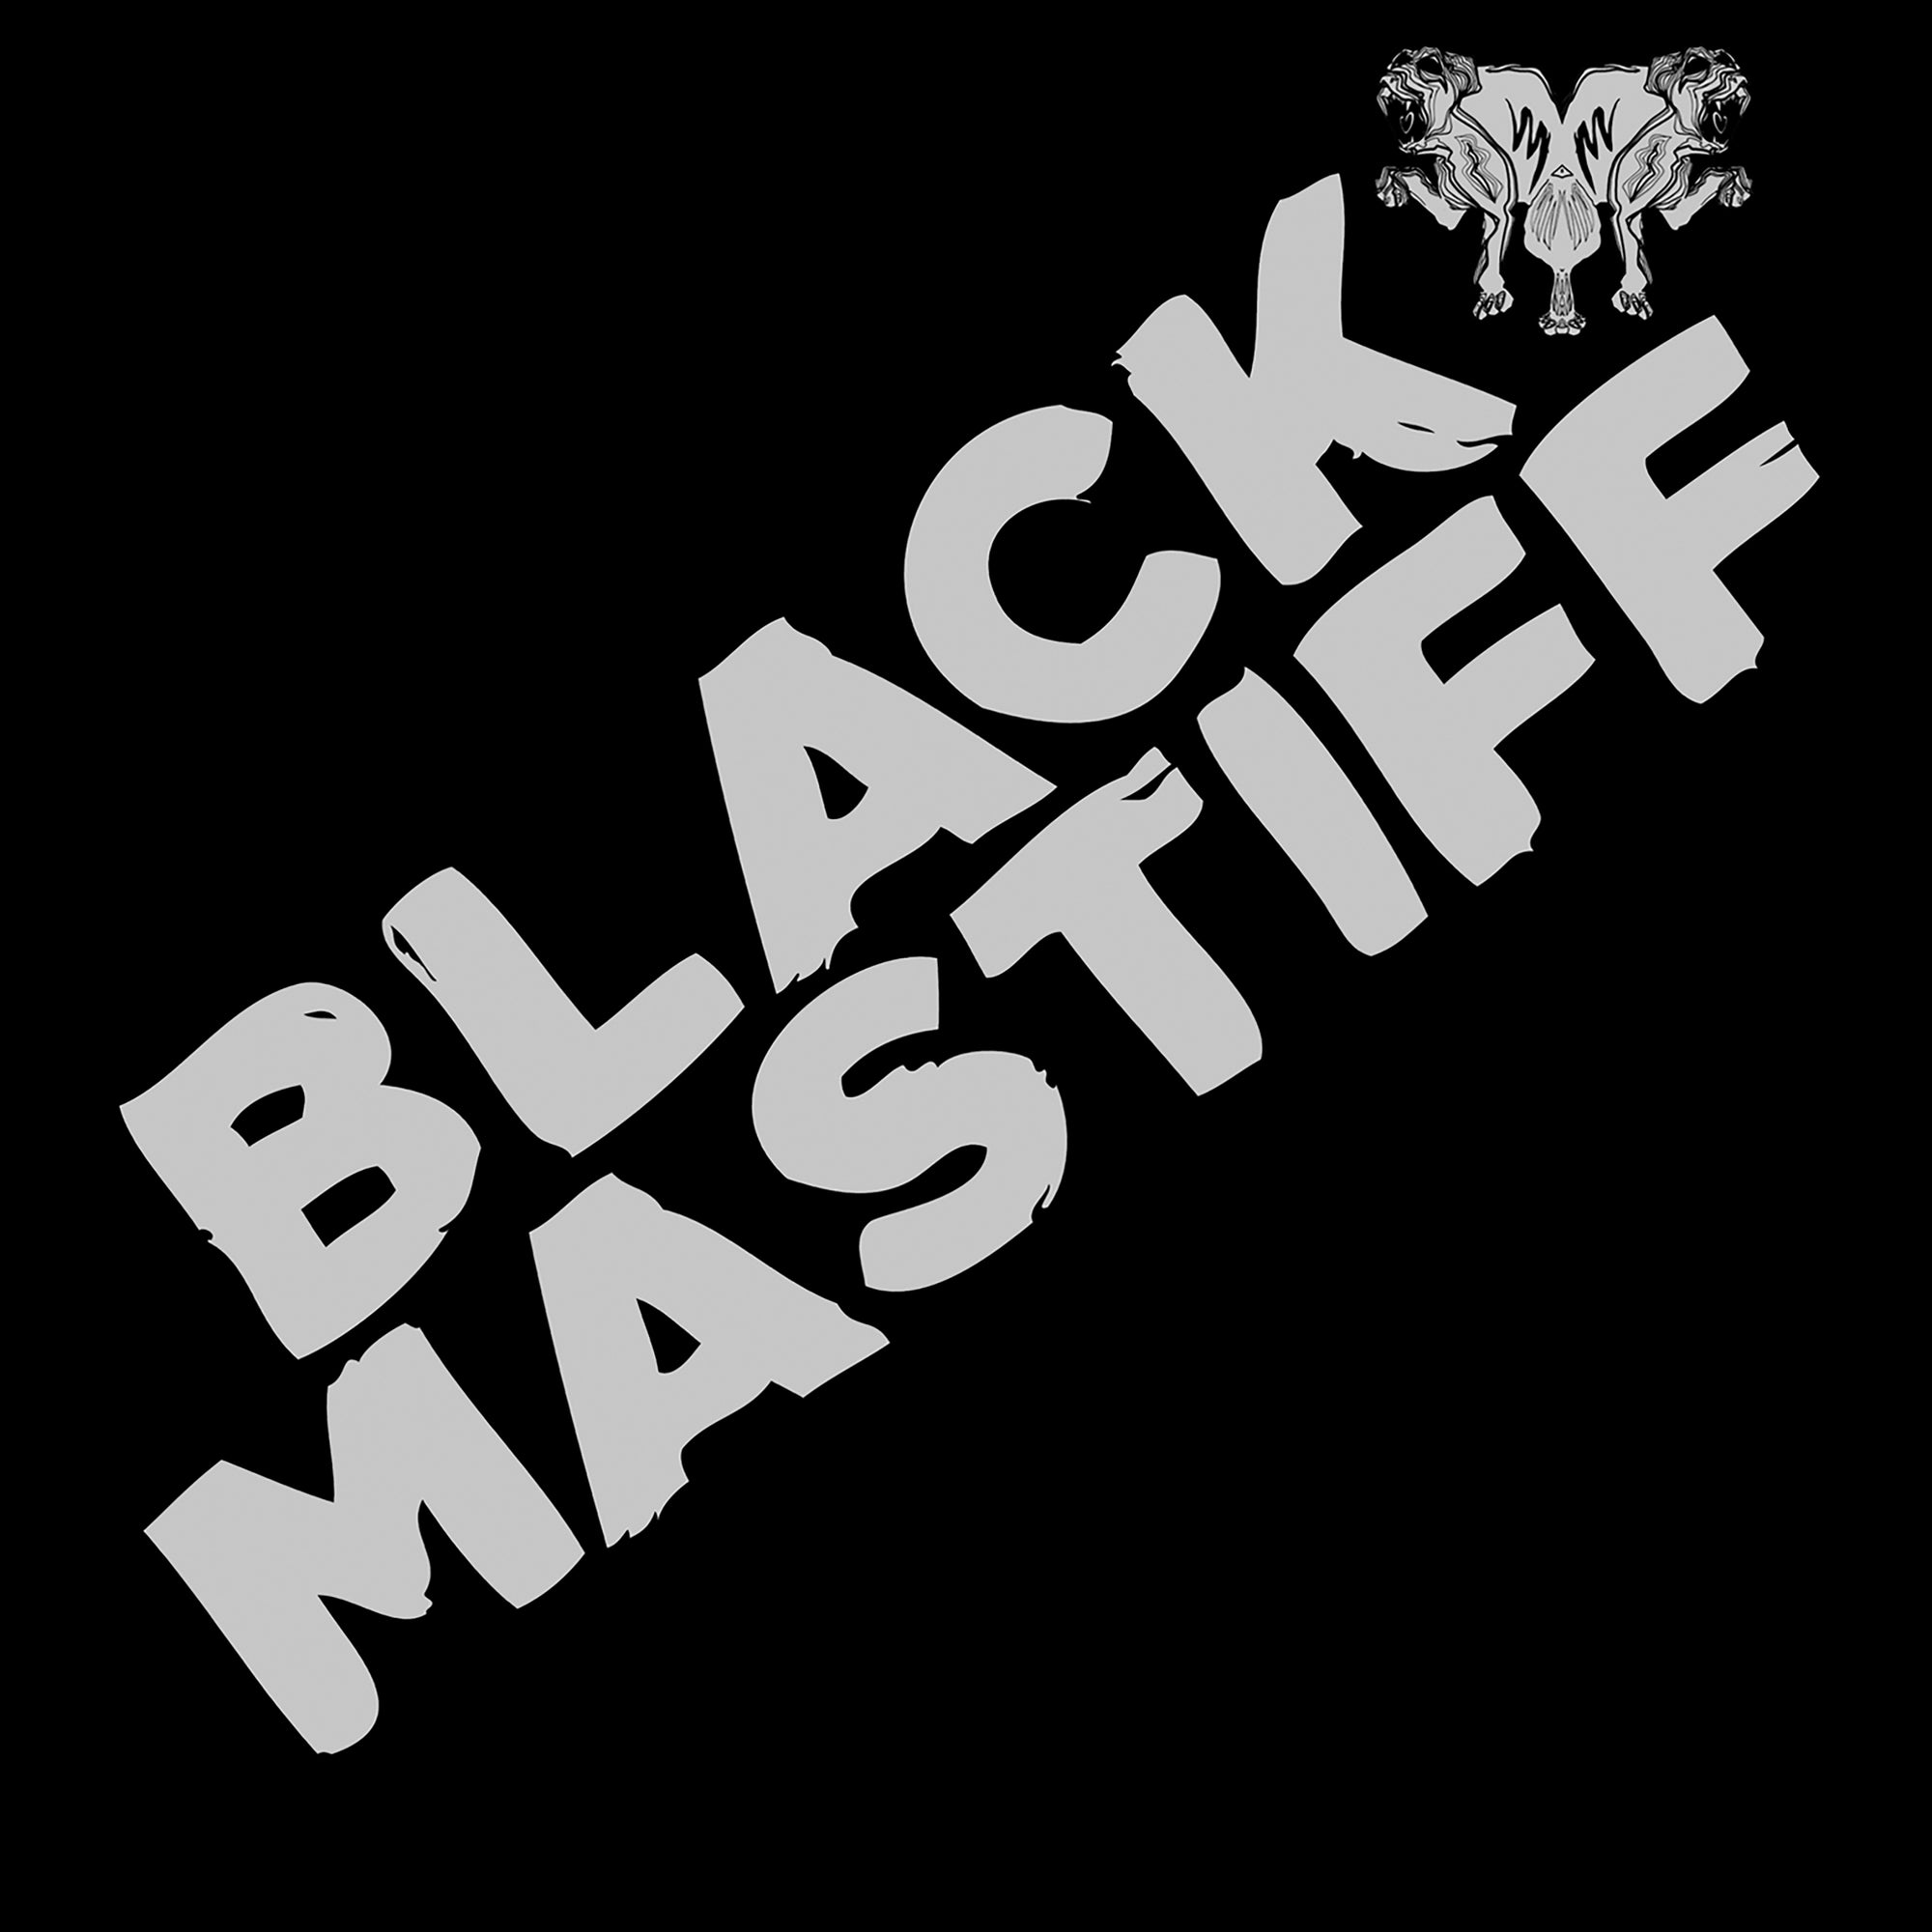 Black Mastiff